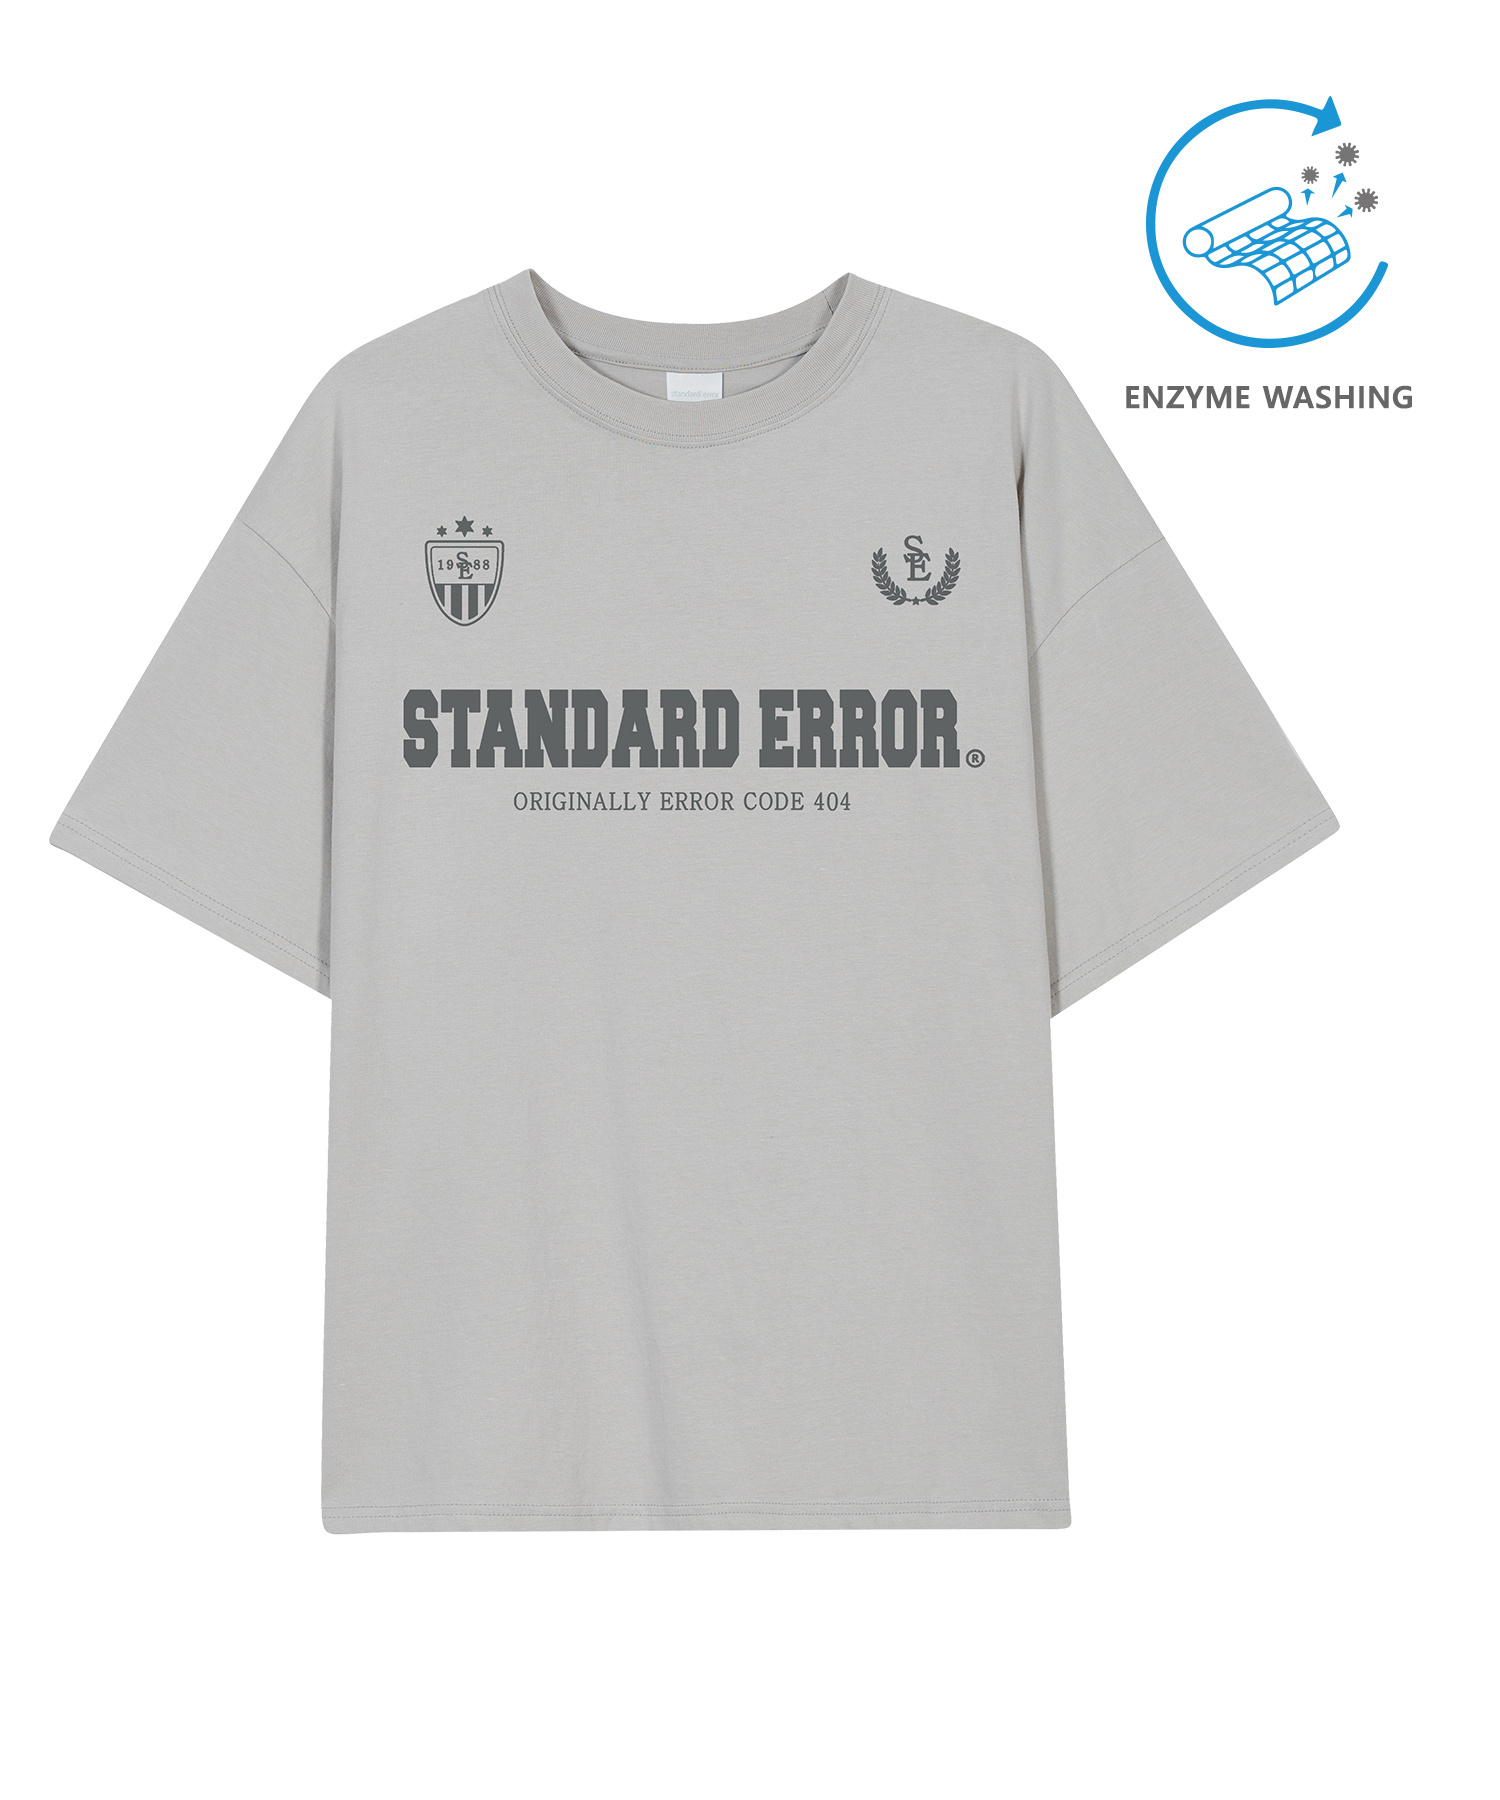 IRT165 [Compact YAN] Enzaim Washing Old School Sporty Emblem Short-sleeved T-shirt Khaki Gray